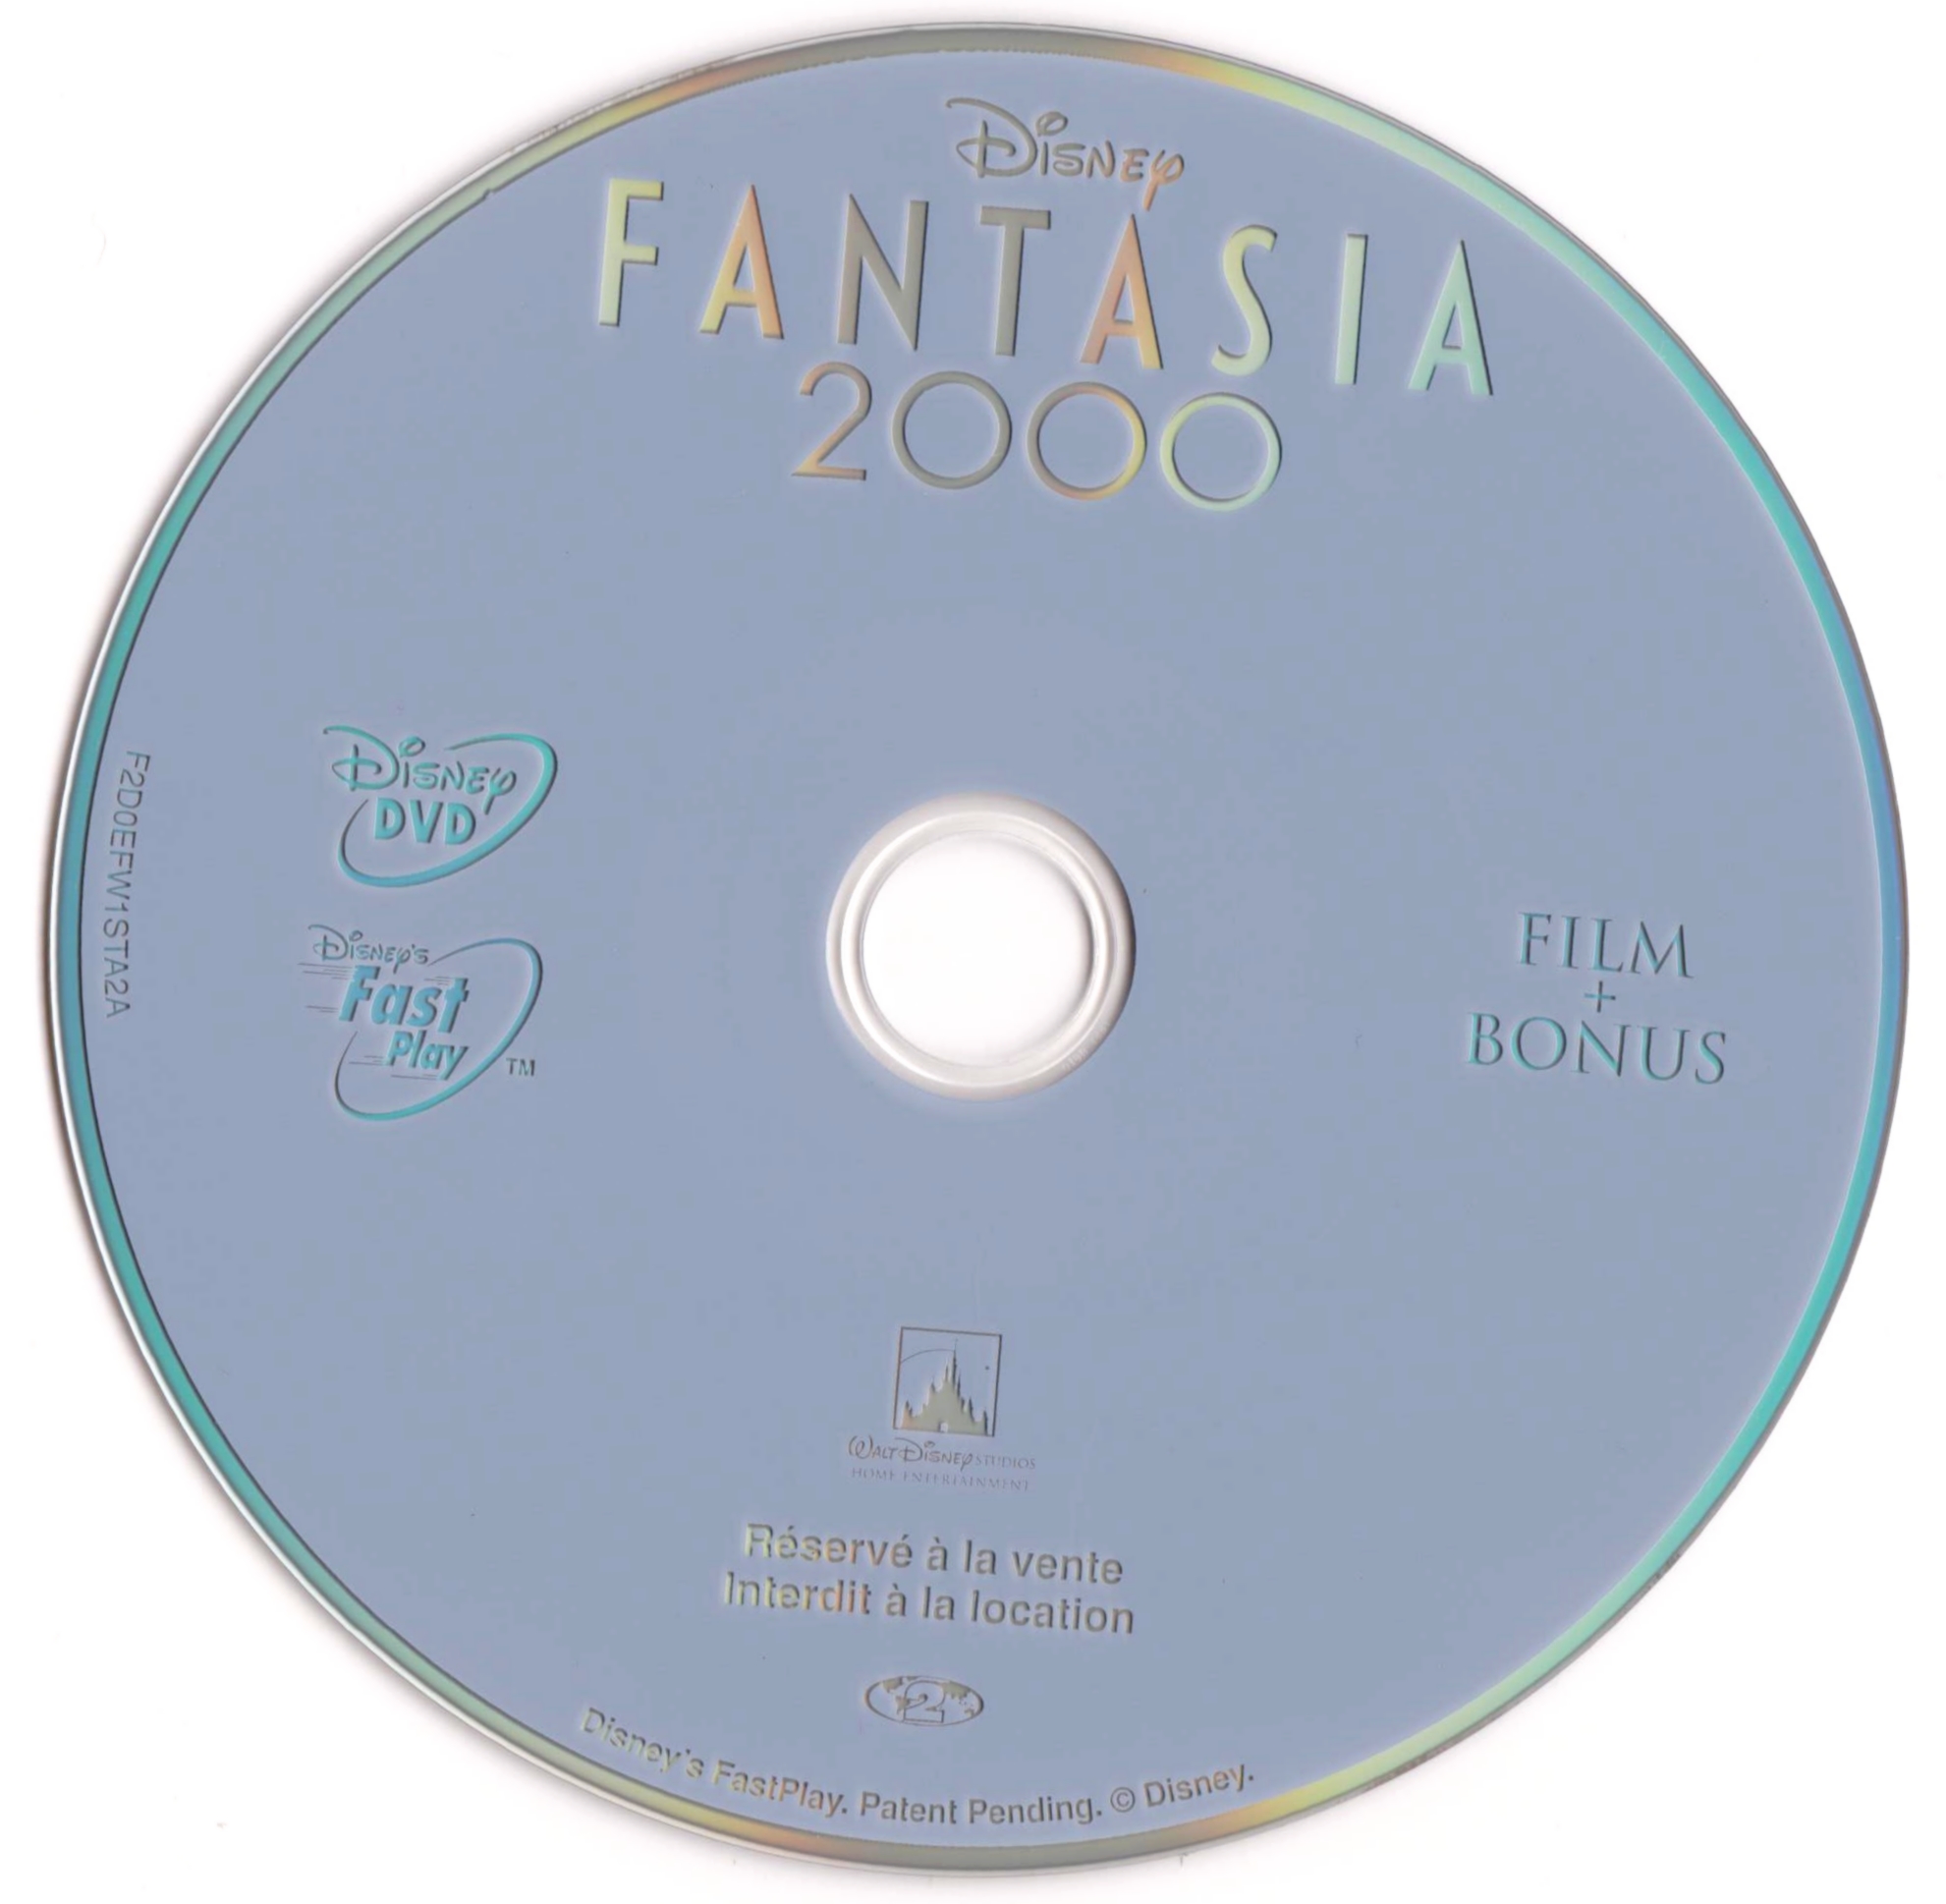 Fantasia 2000 v2